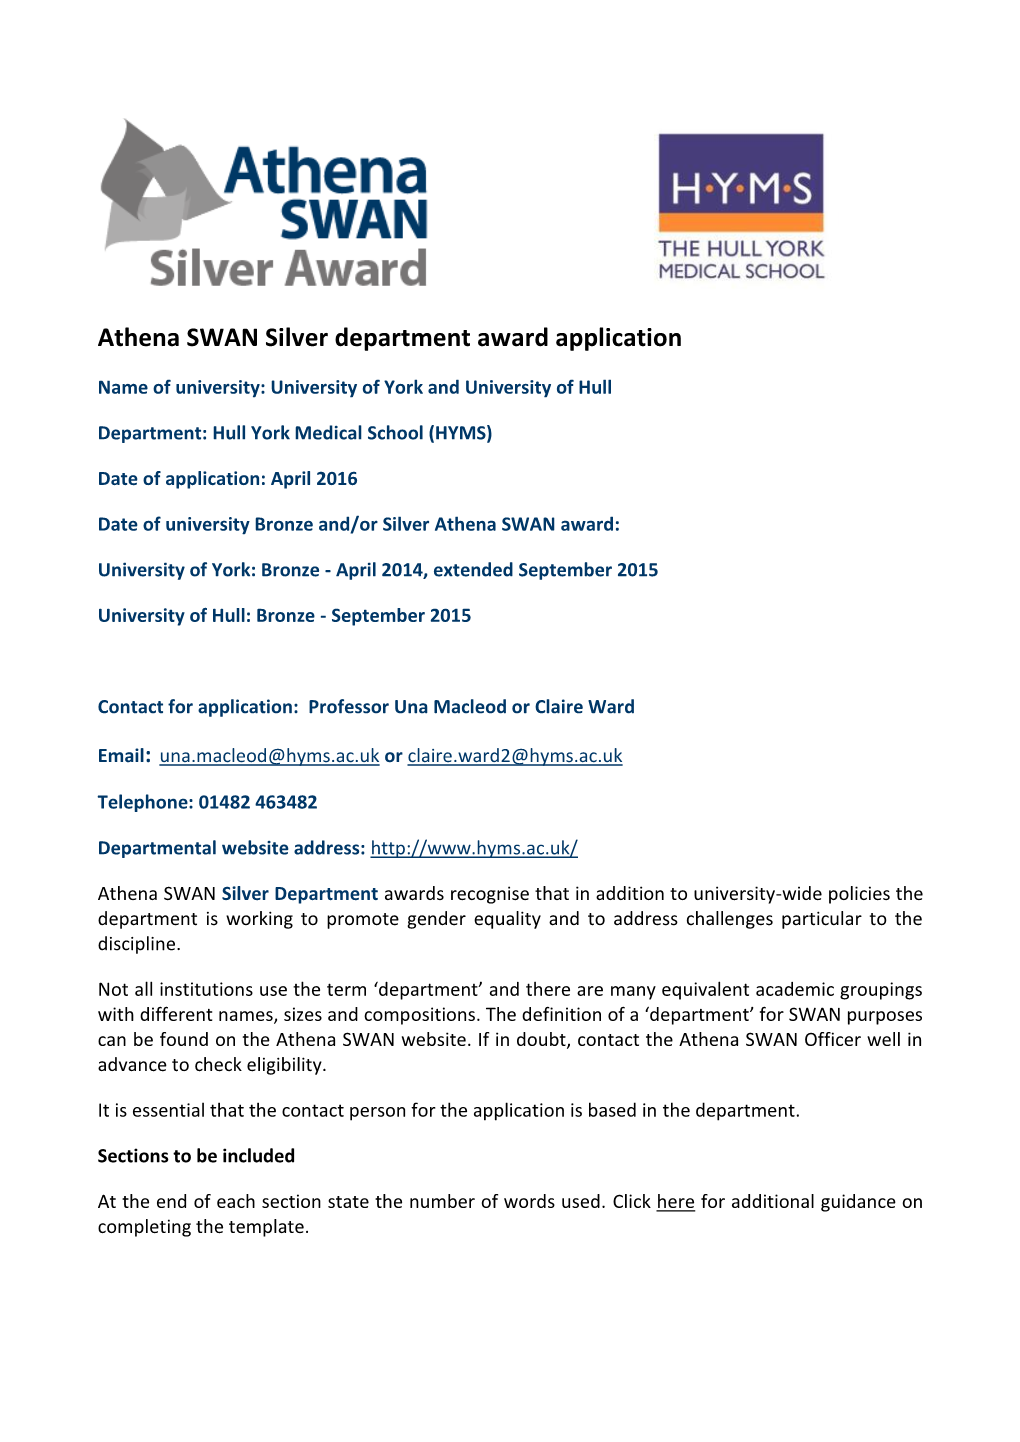 Athena SWAN Silver Department Award Application